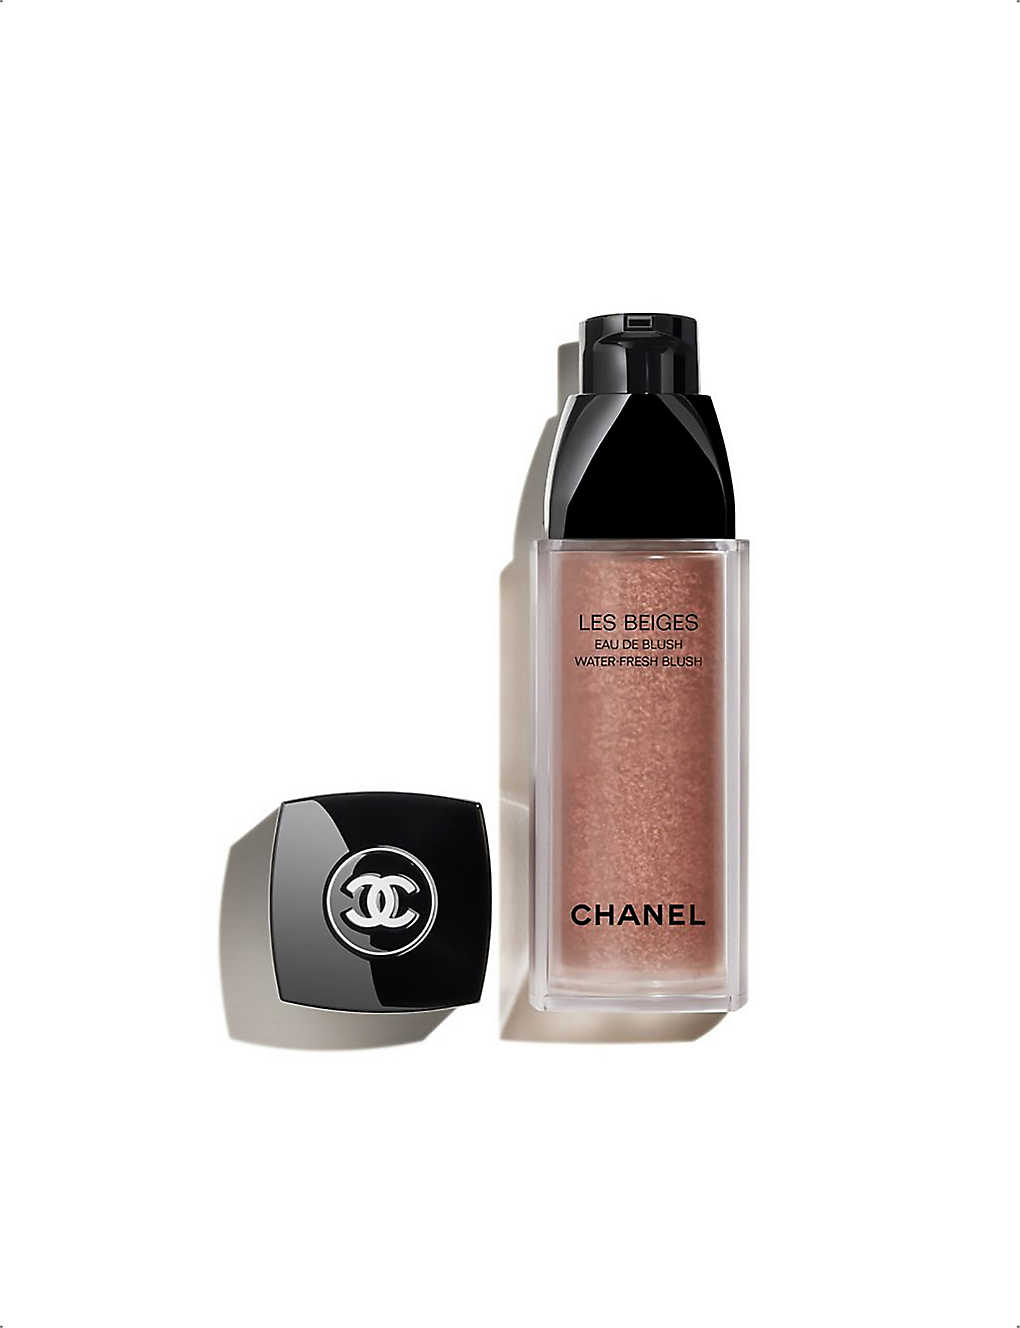 Chanel Light Peach Les Beiges Water-fresh Blush